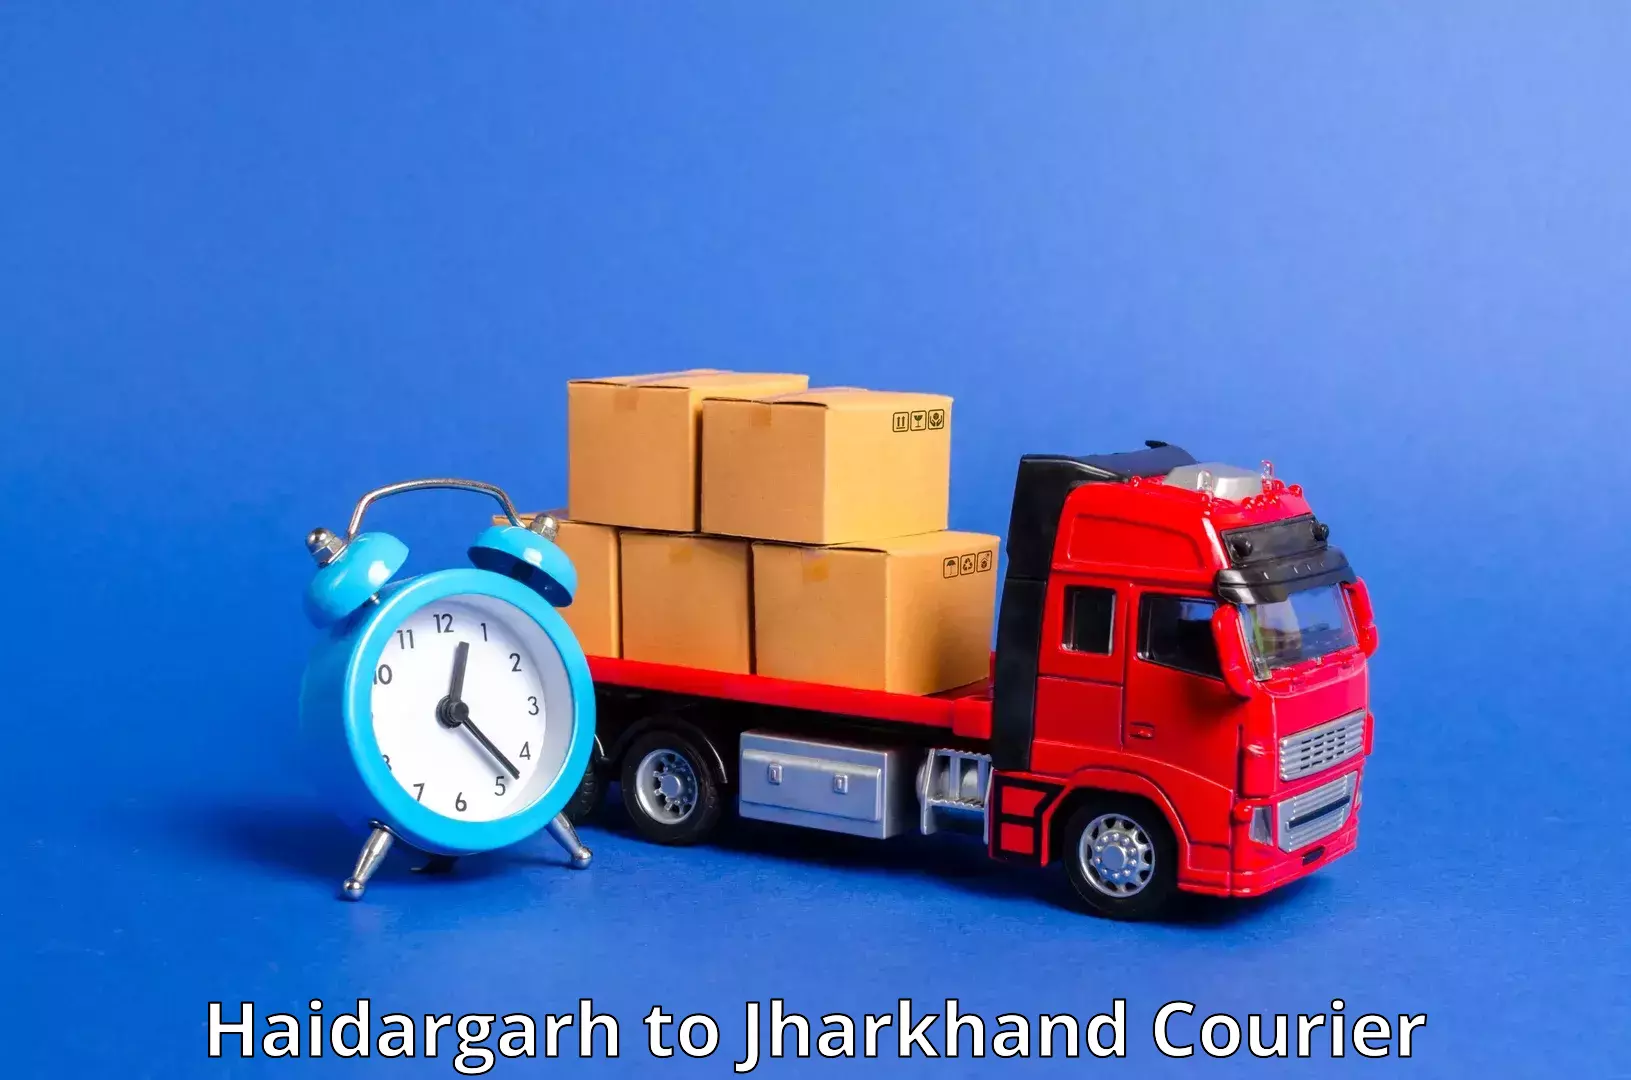 Logistics service provider Haidargarh to Ramgarh